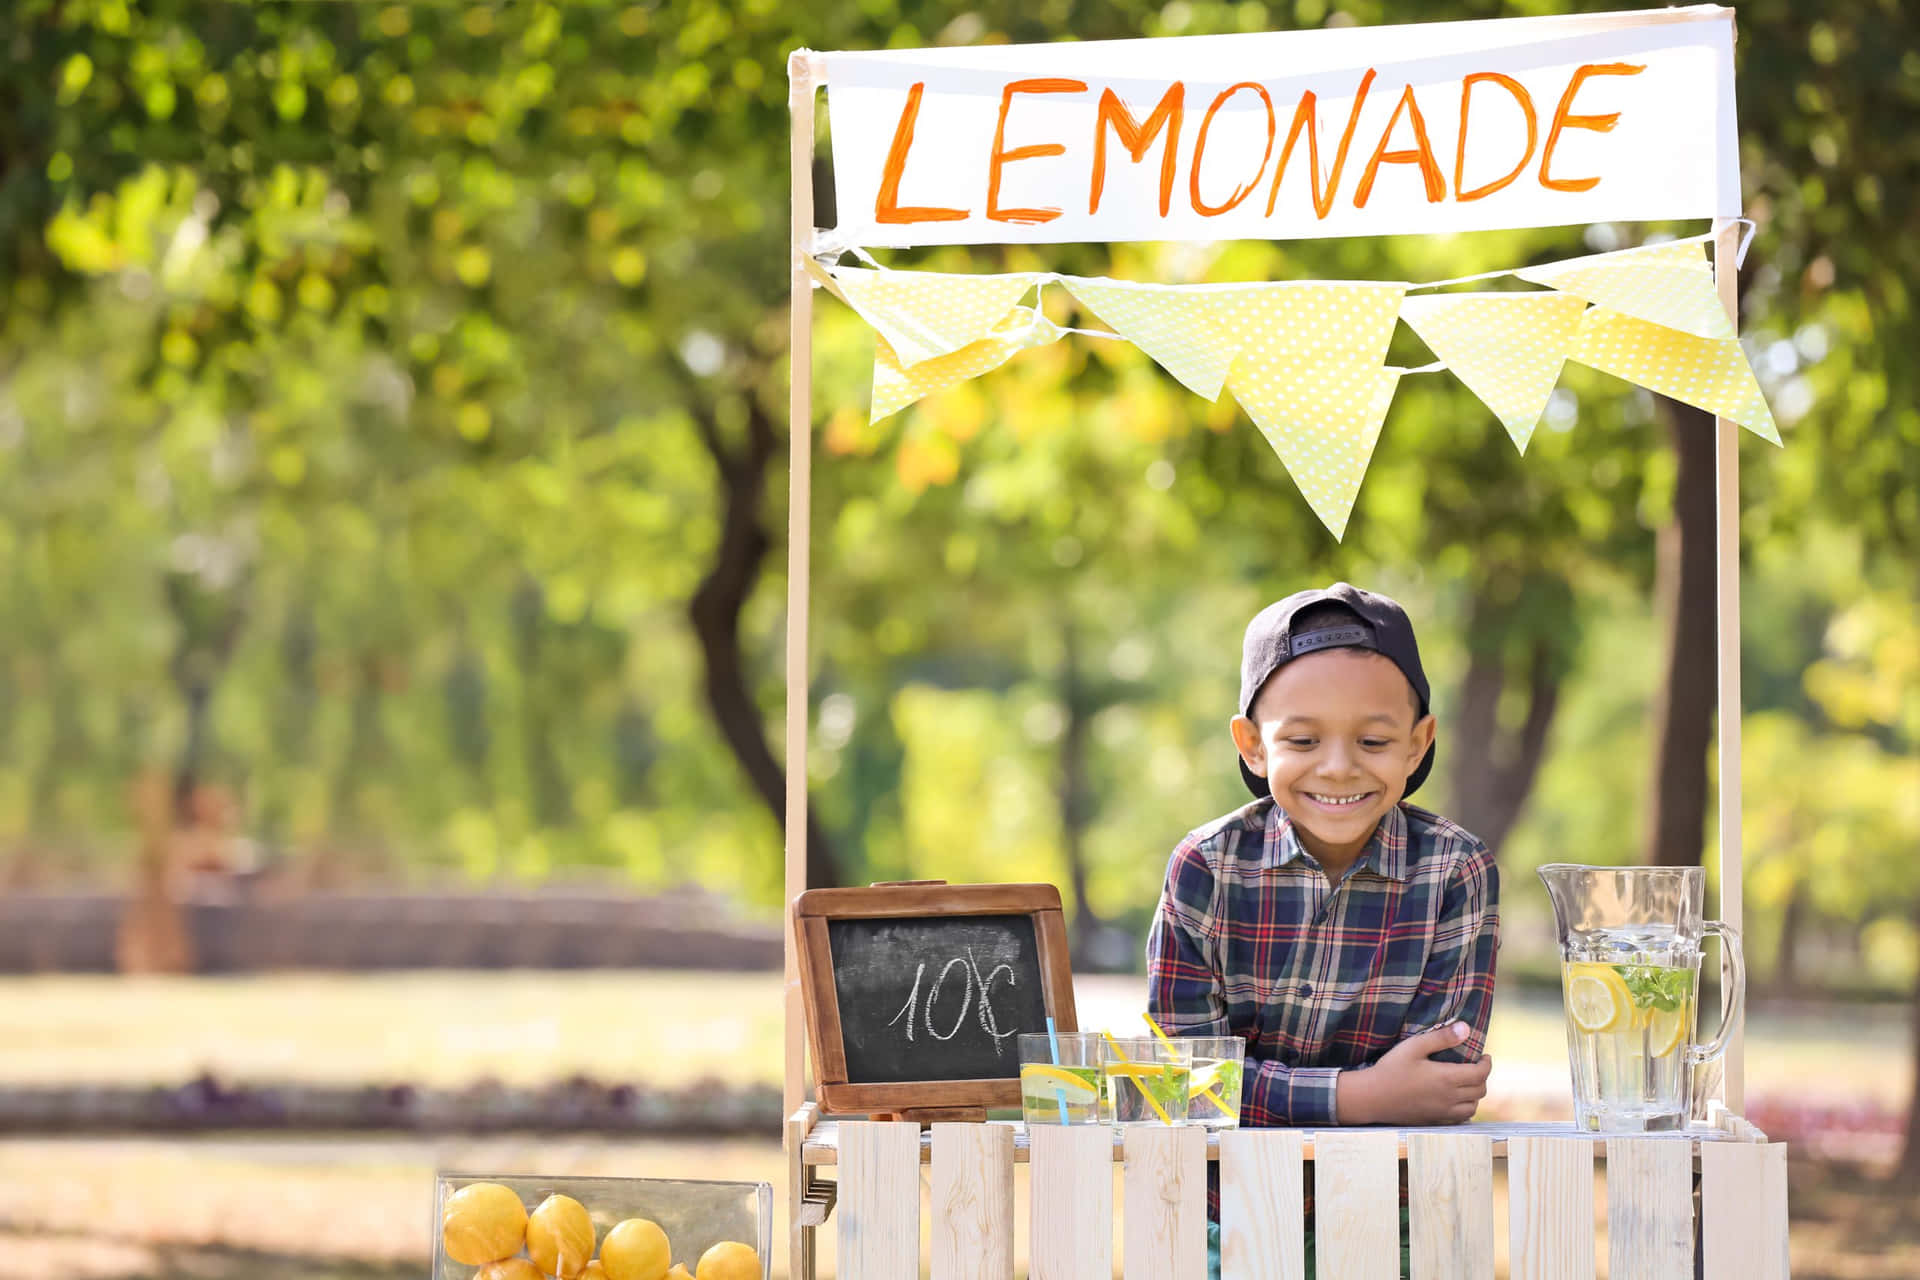 A Boy Selling Lemonade At A Park